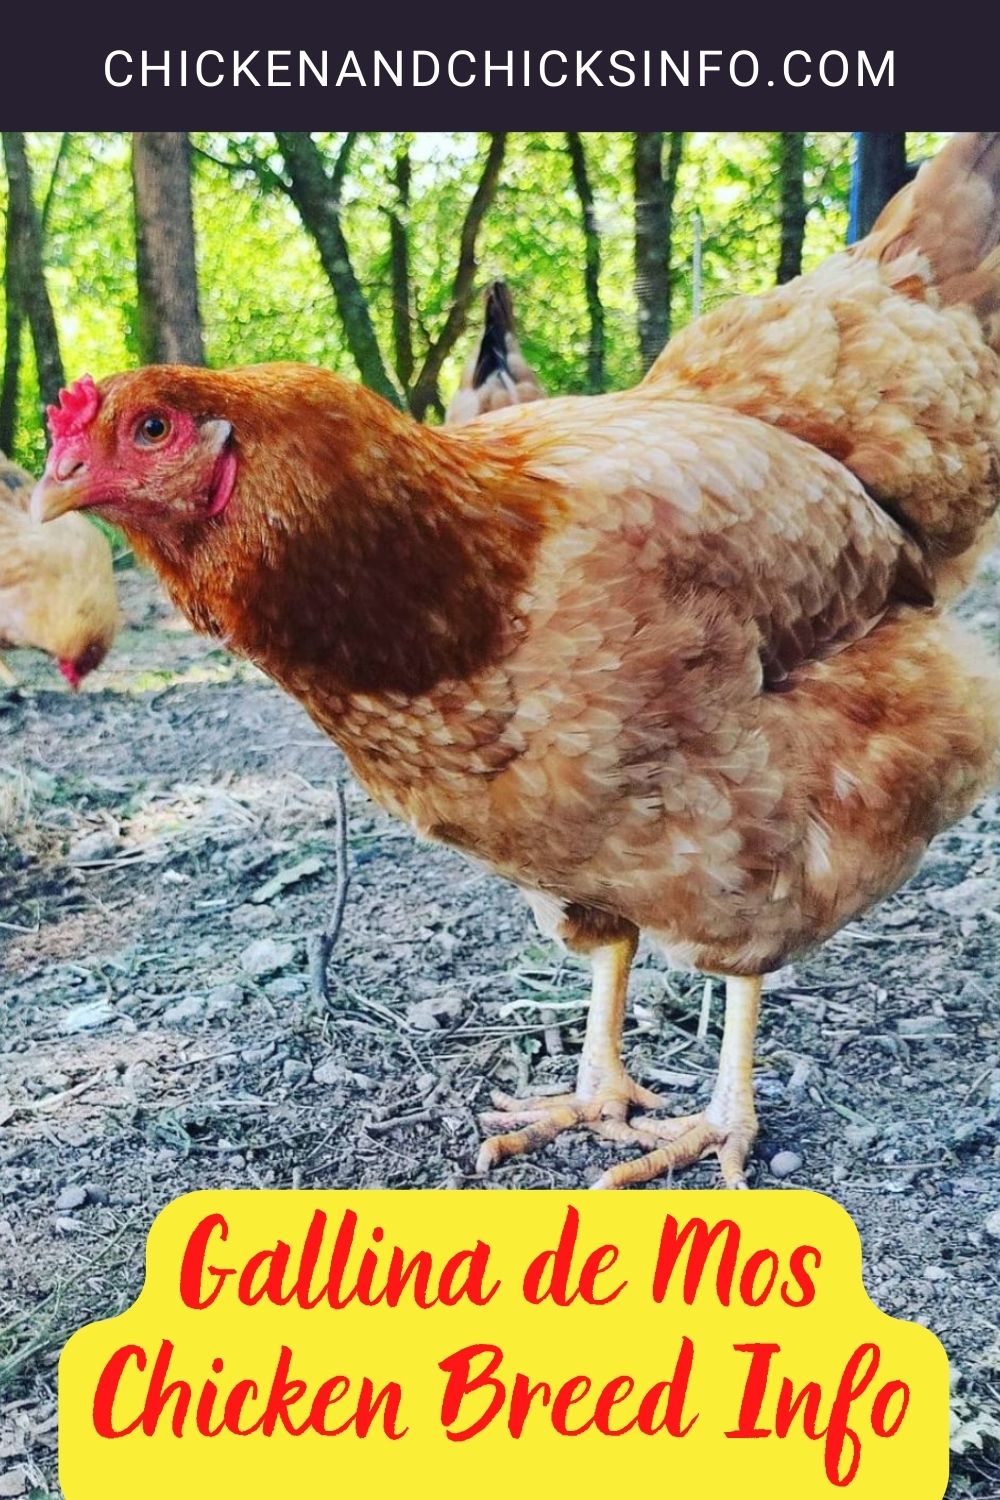 Gallina de Mos Chicken Breed Info pinterest image.